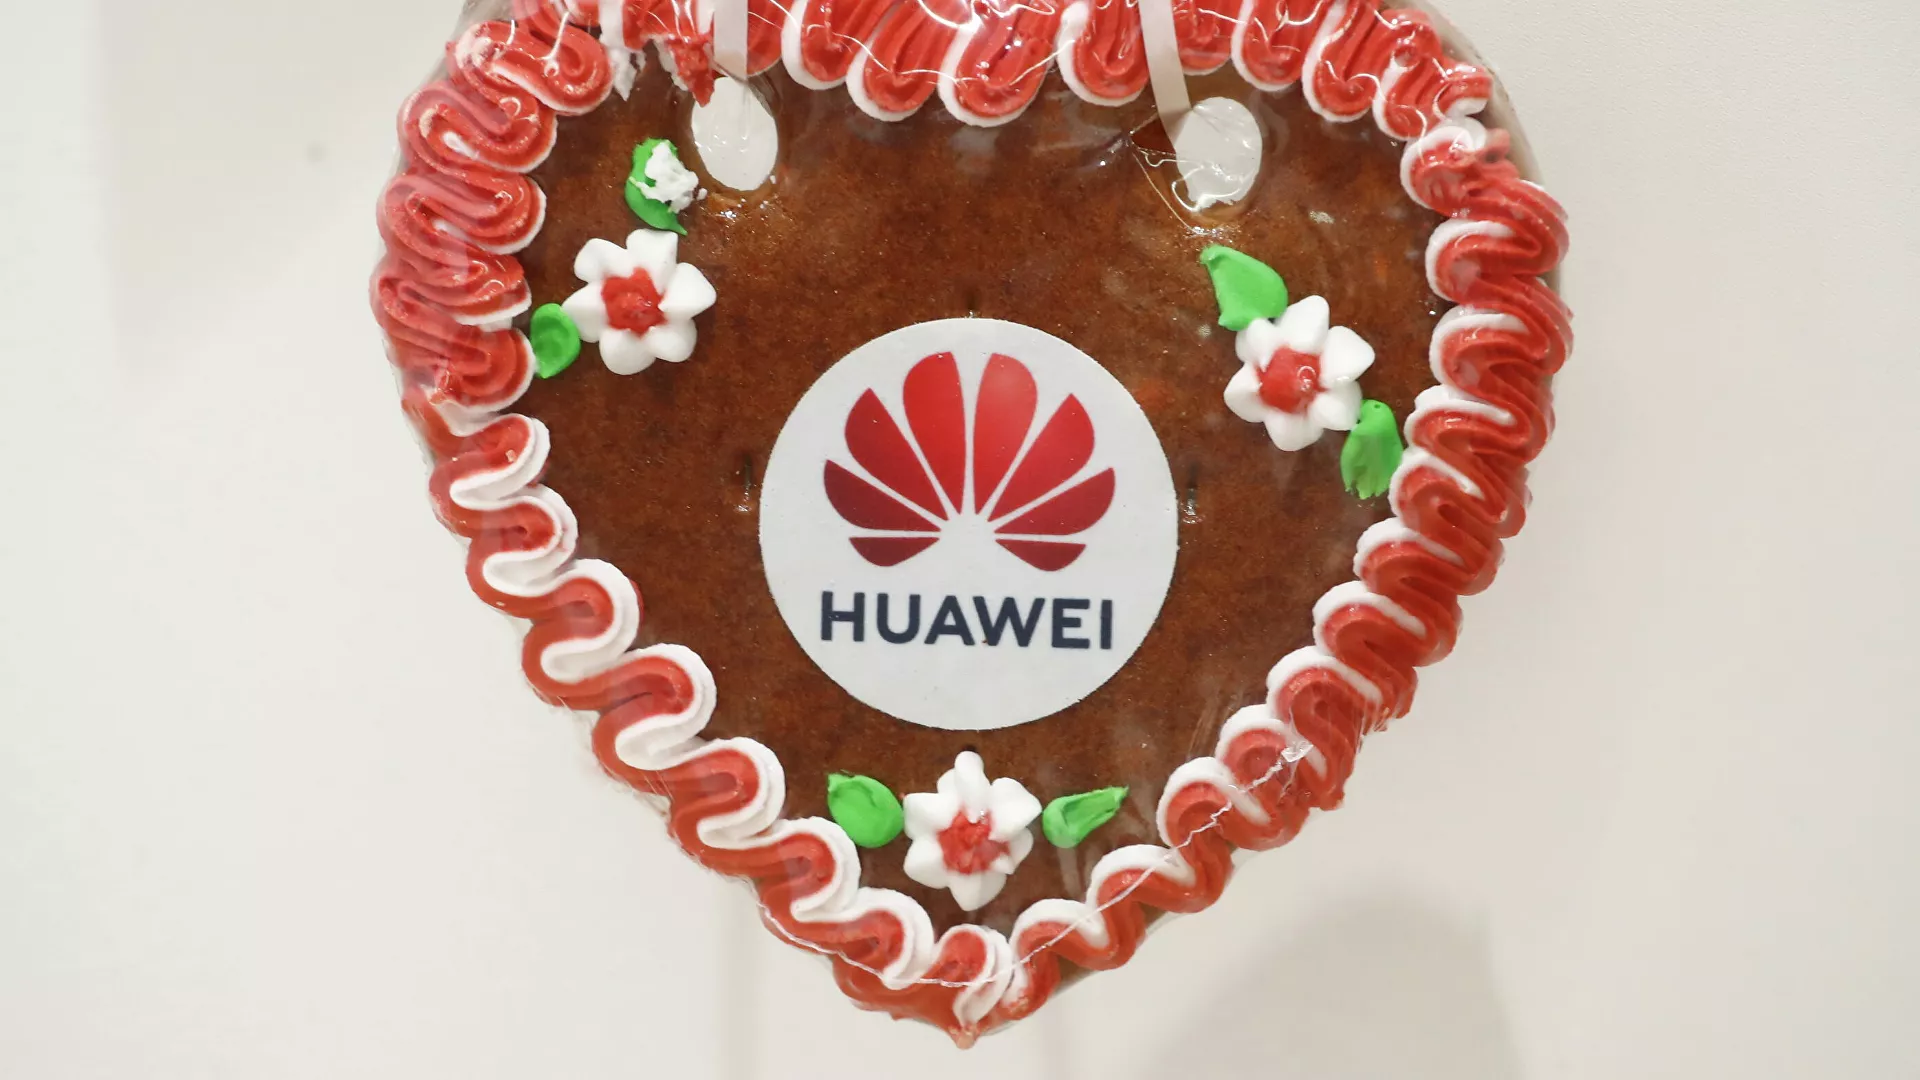 Huawei birthday cake. © REUTERS / WOLFGANG RATTAY